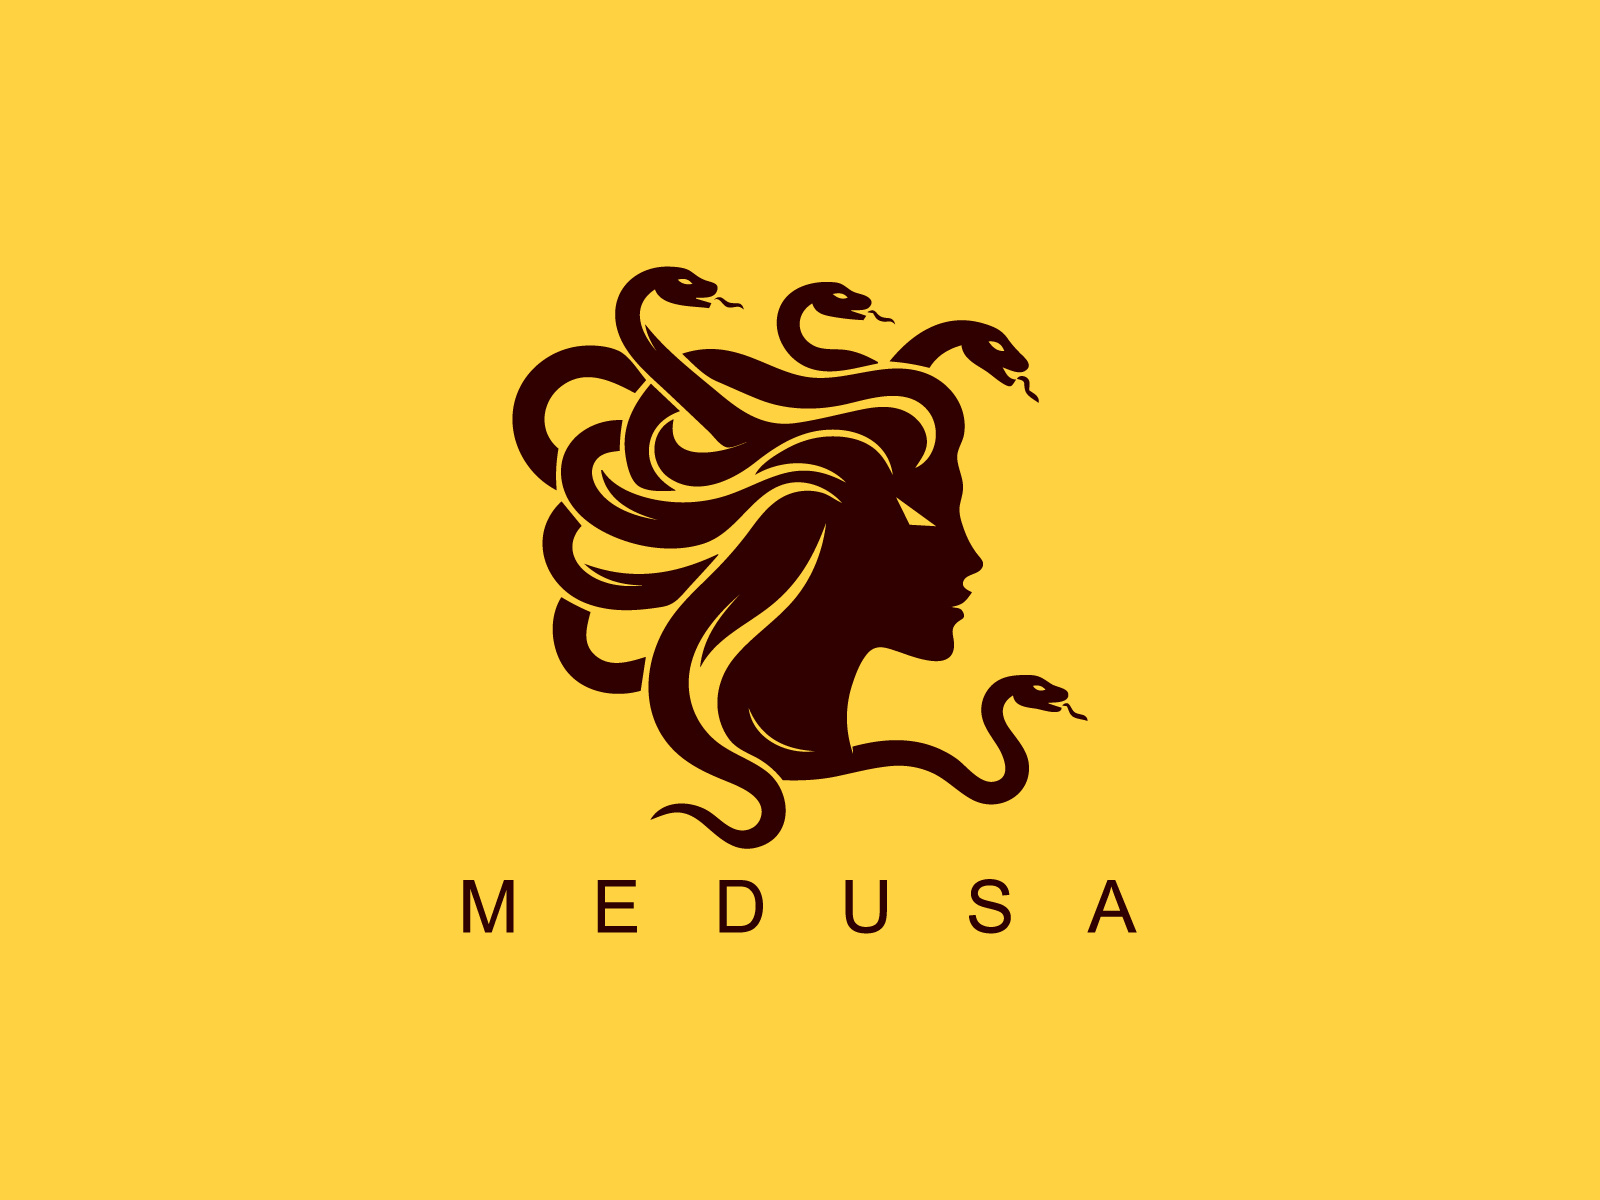 Medusa Logo by Austin Naveed on Dribbble